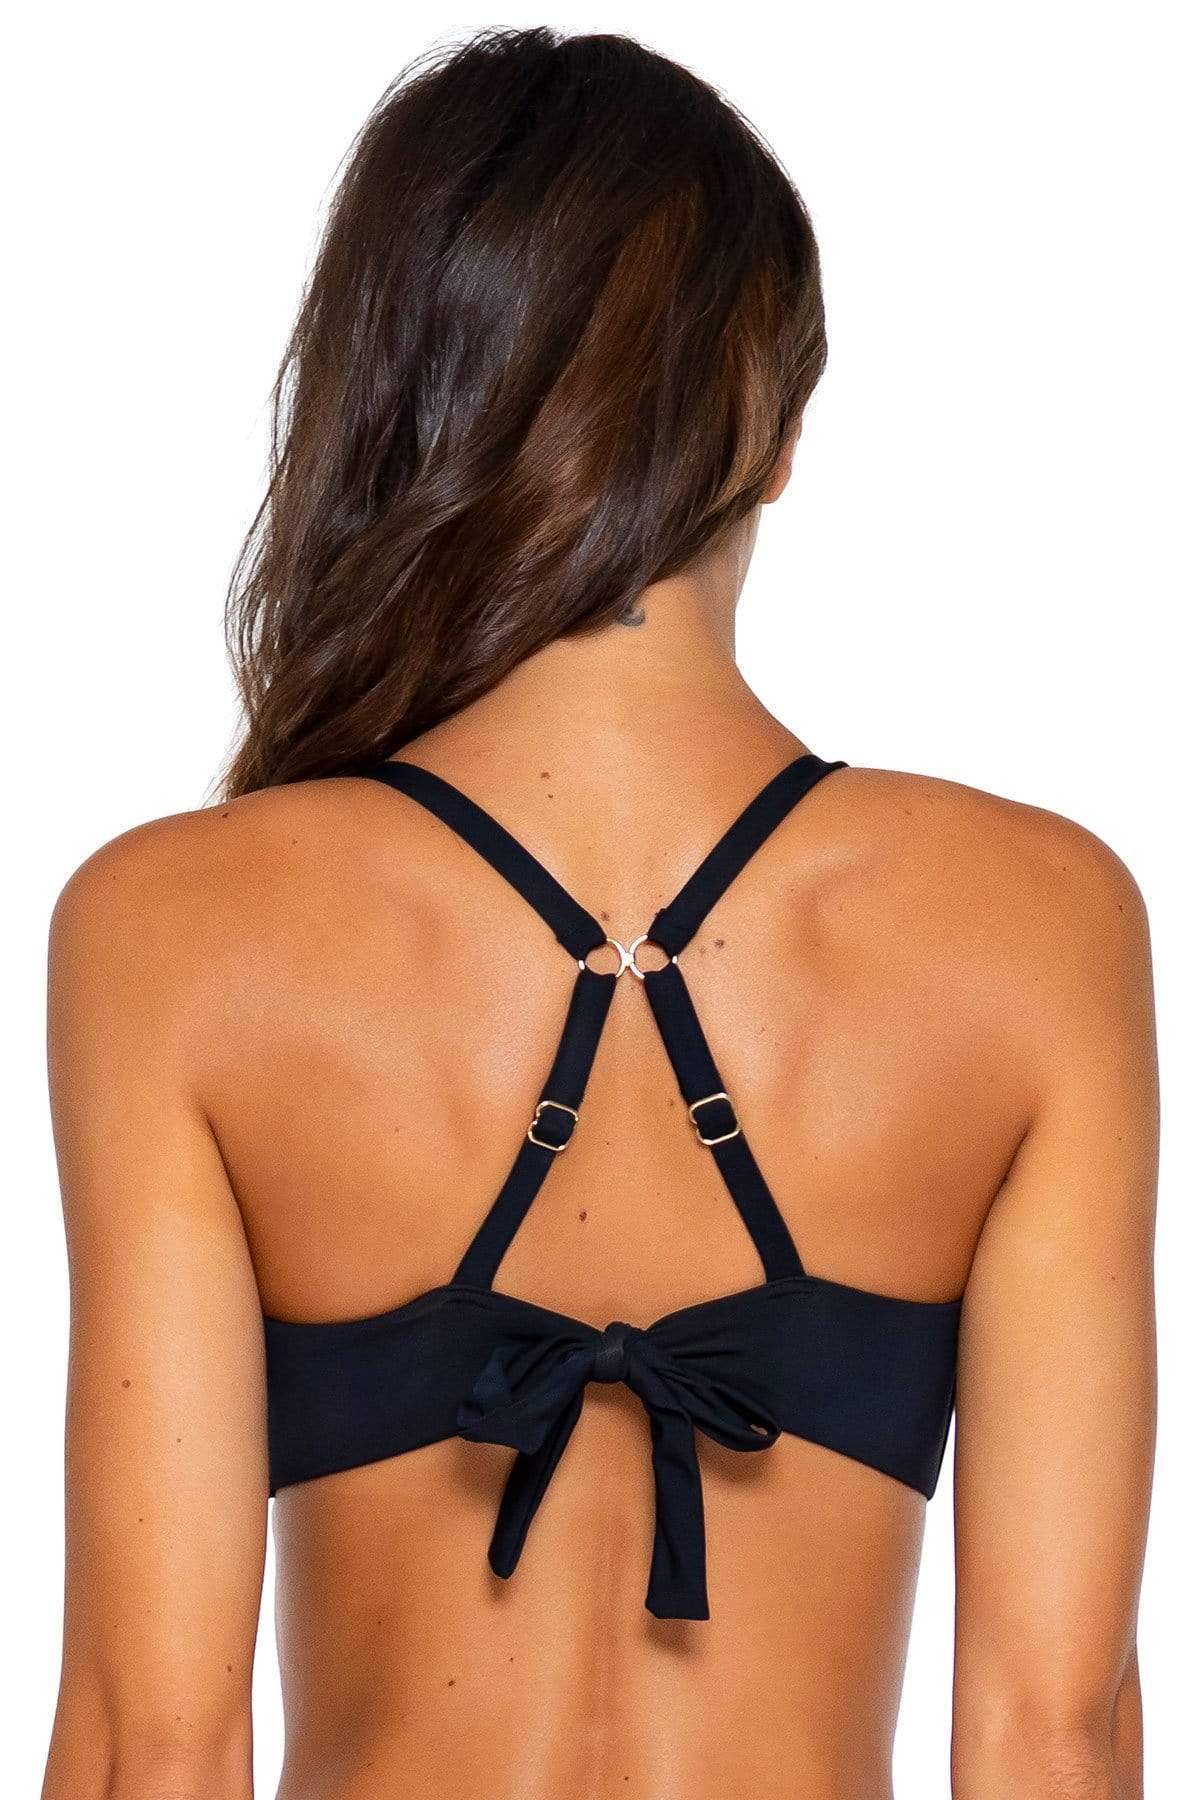 Bestswimwear -  Sunsets Black Olivia Tie Back